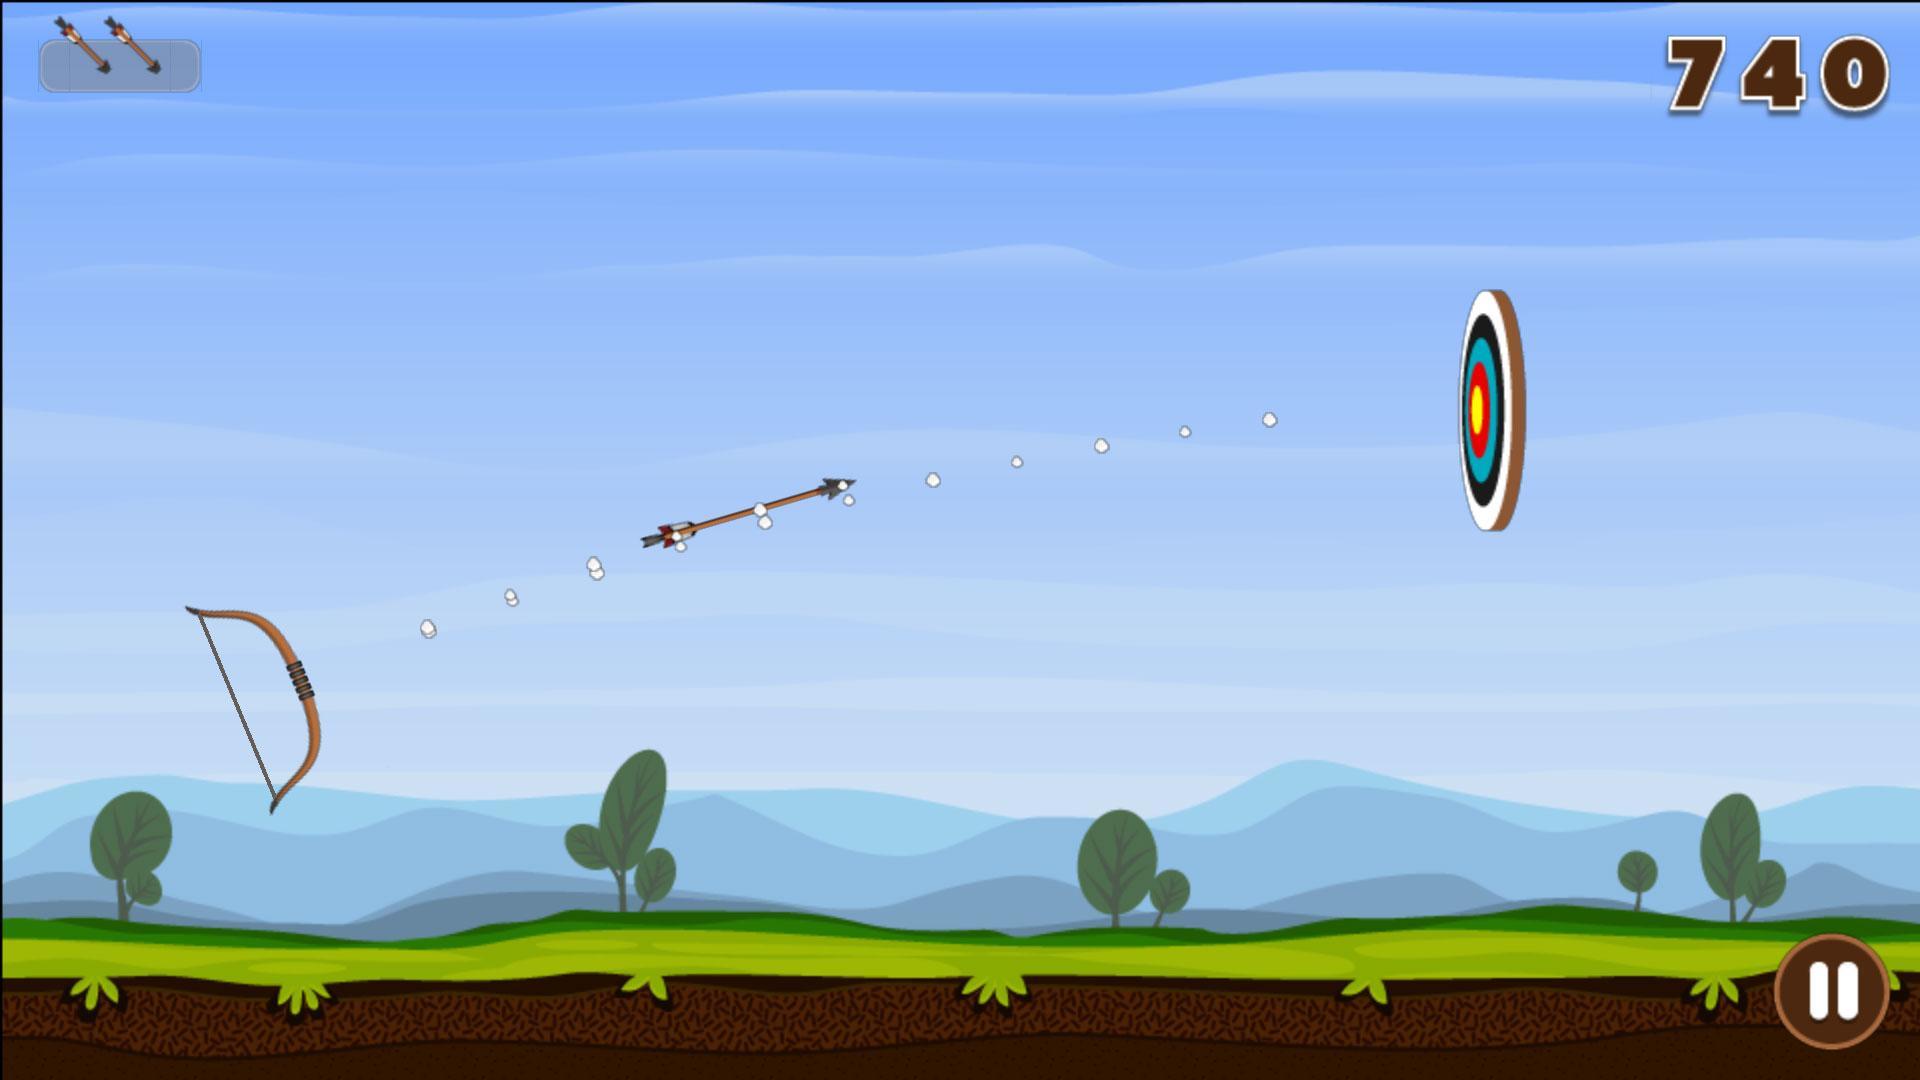 Screenshot of Archery